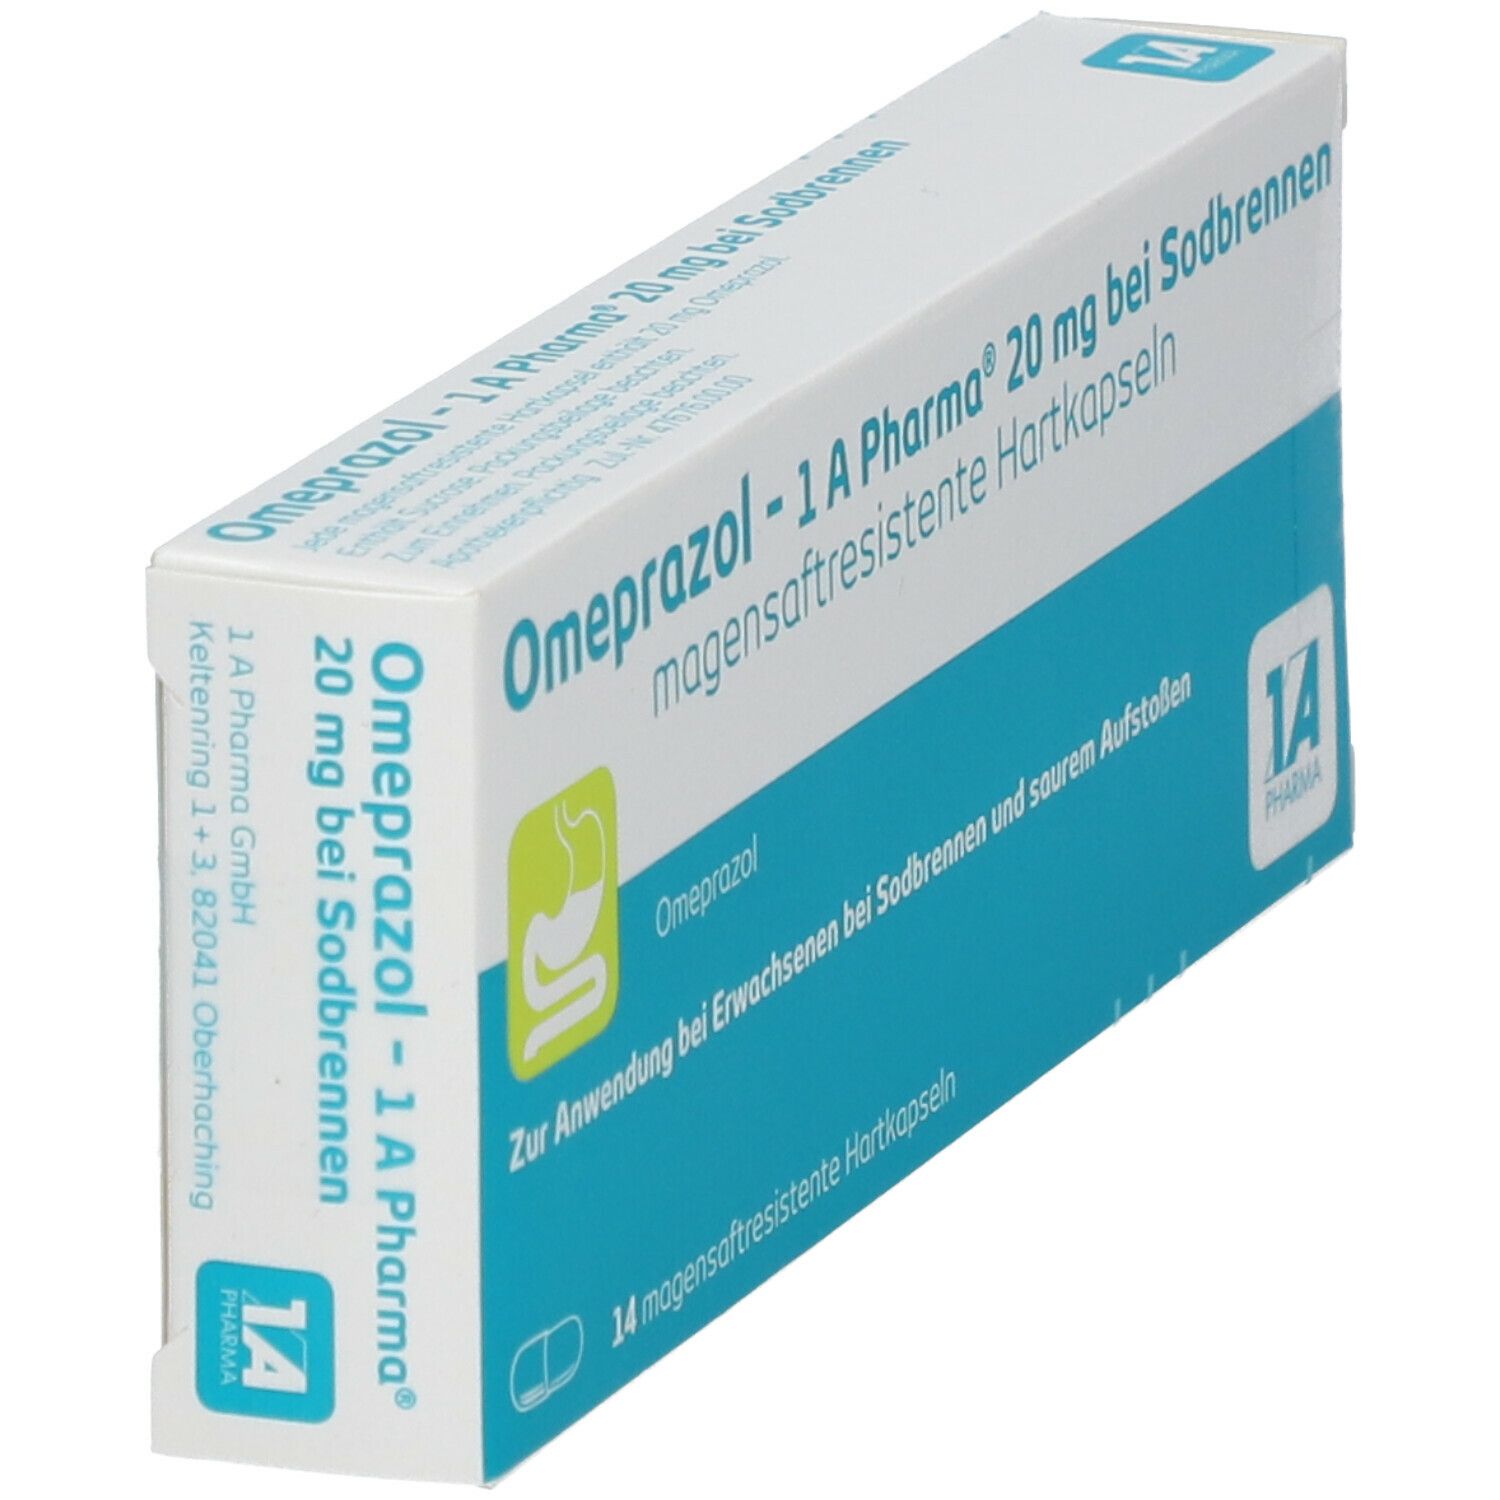 Omeprazol - 1 A Pharma® 20 mg bei Sodbrennen